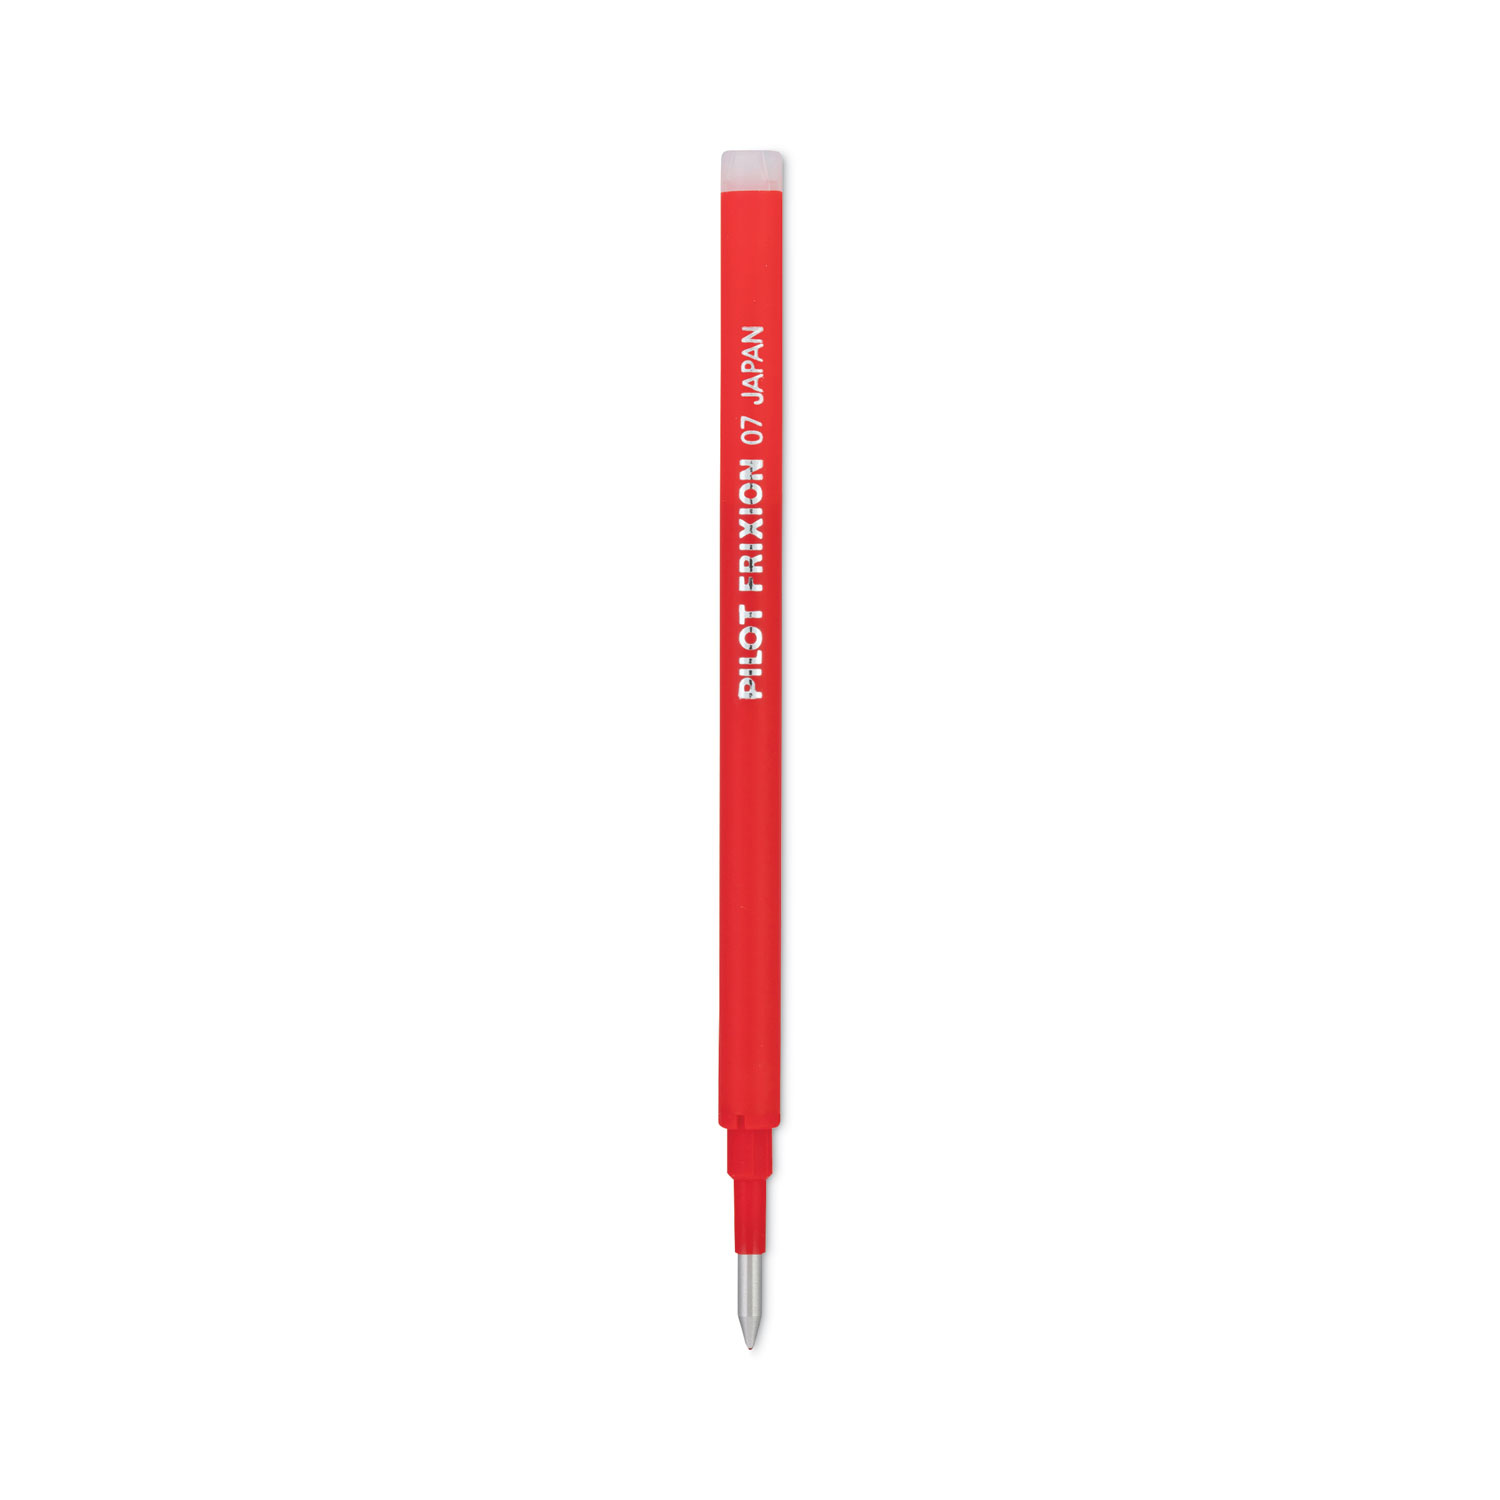 Refill Ballpoint Pen Pilot FriXion Clicker 0.7 - 3 Pack - Blue/Black